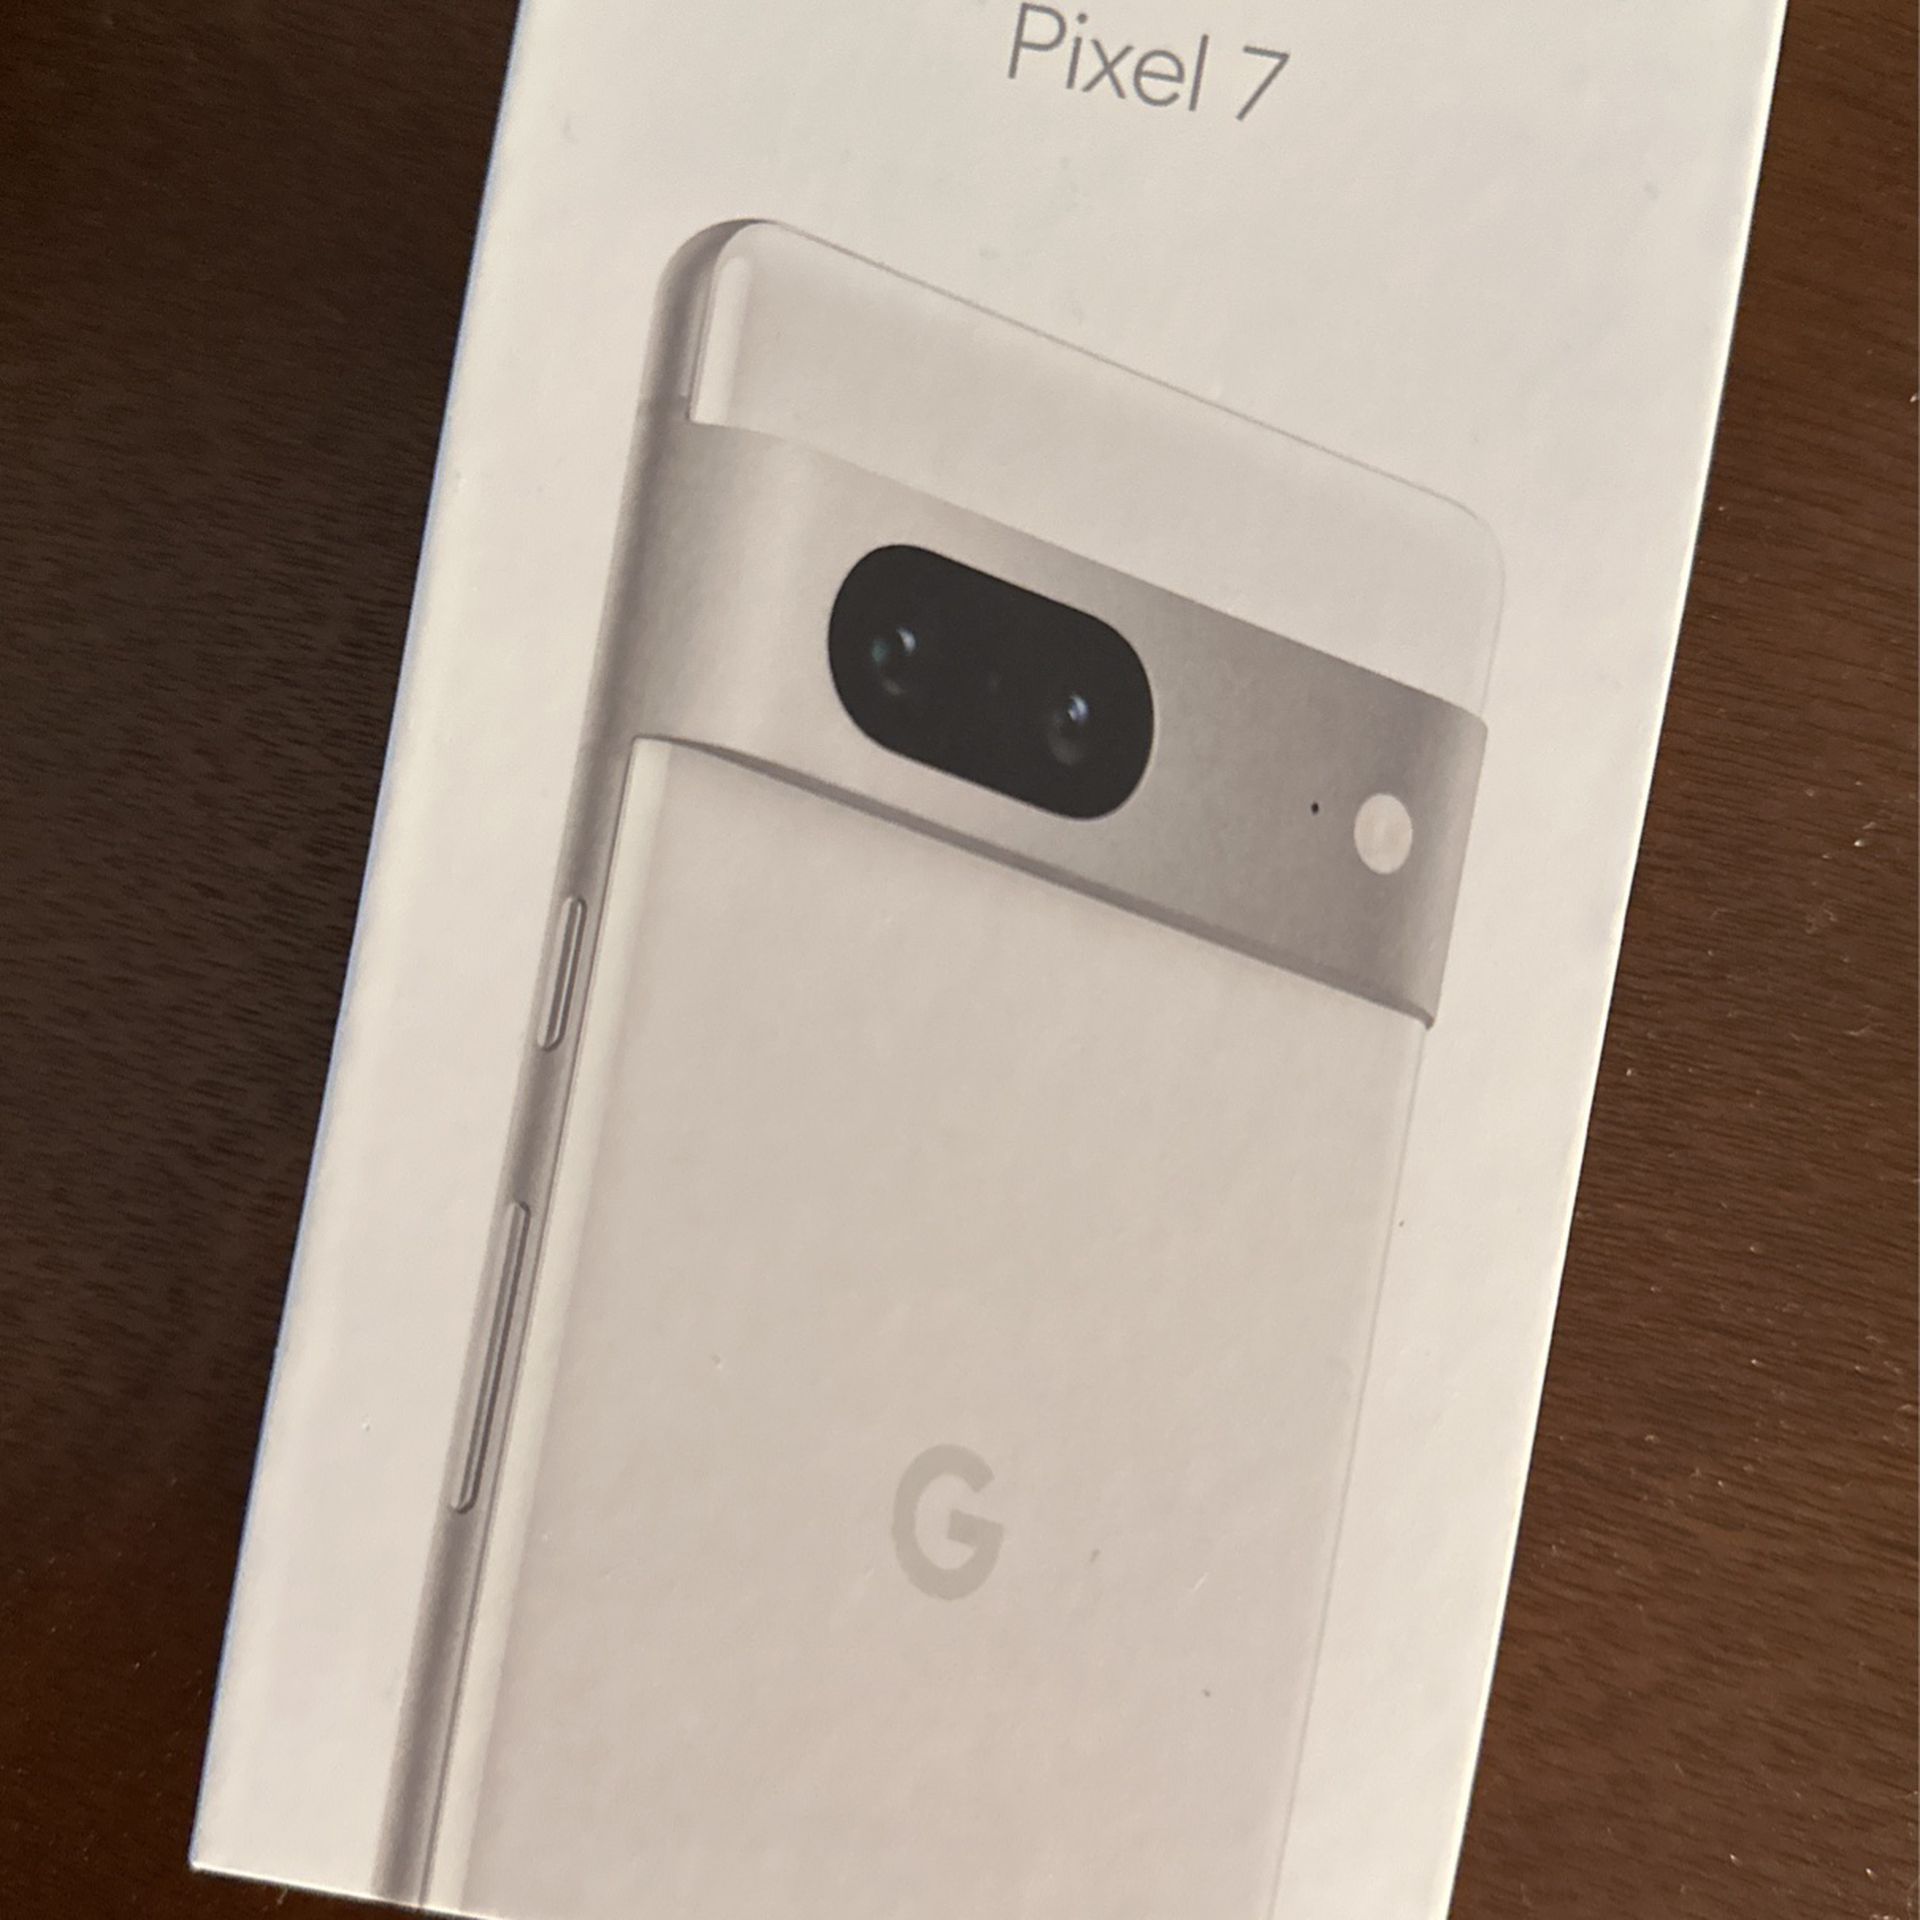 Unlocked White Google Pixel 7 Like New with box - Barely Used